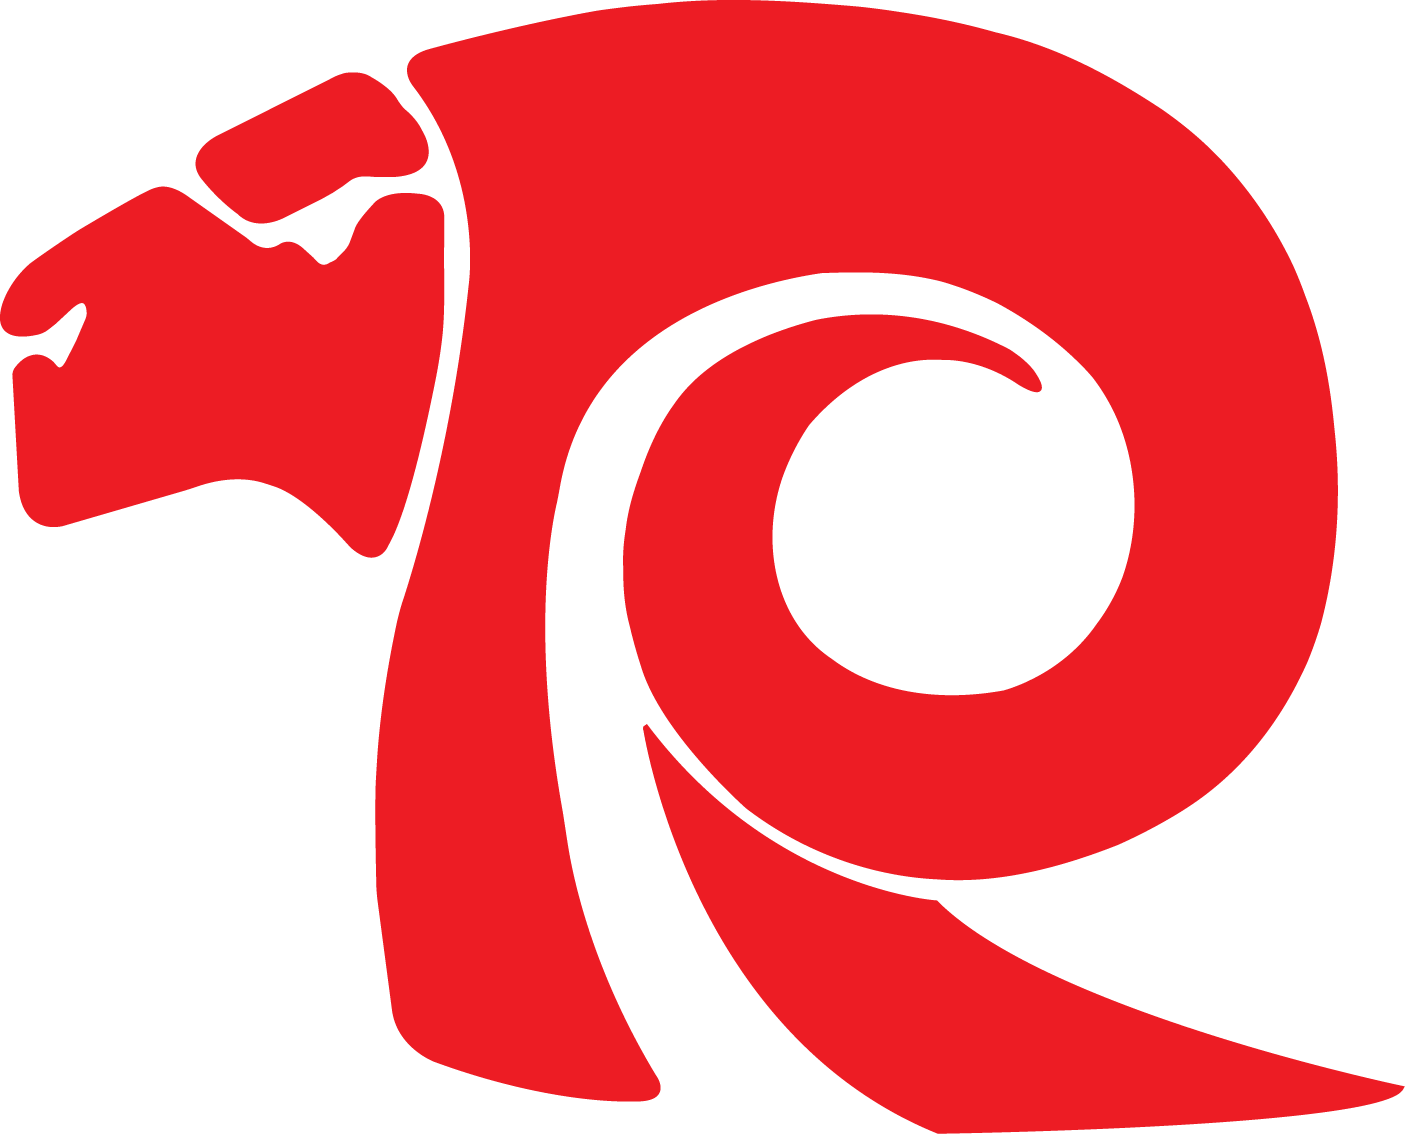 Ralston Rams - Ralston High School Logo (1405x1134)